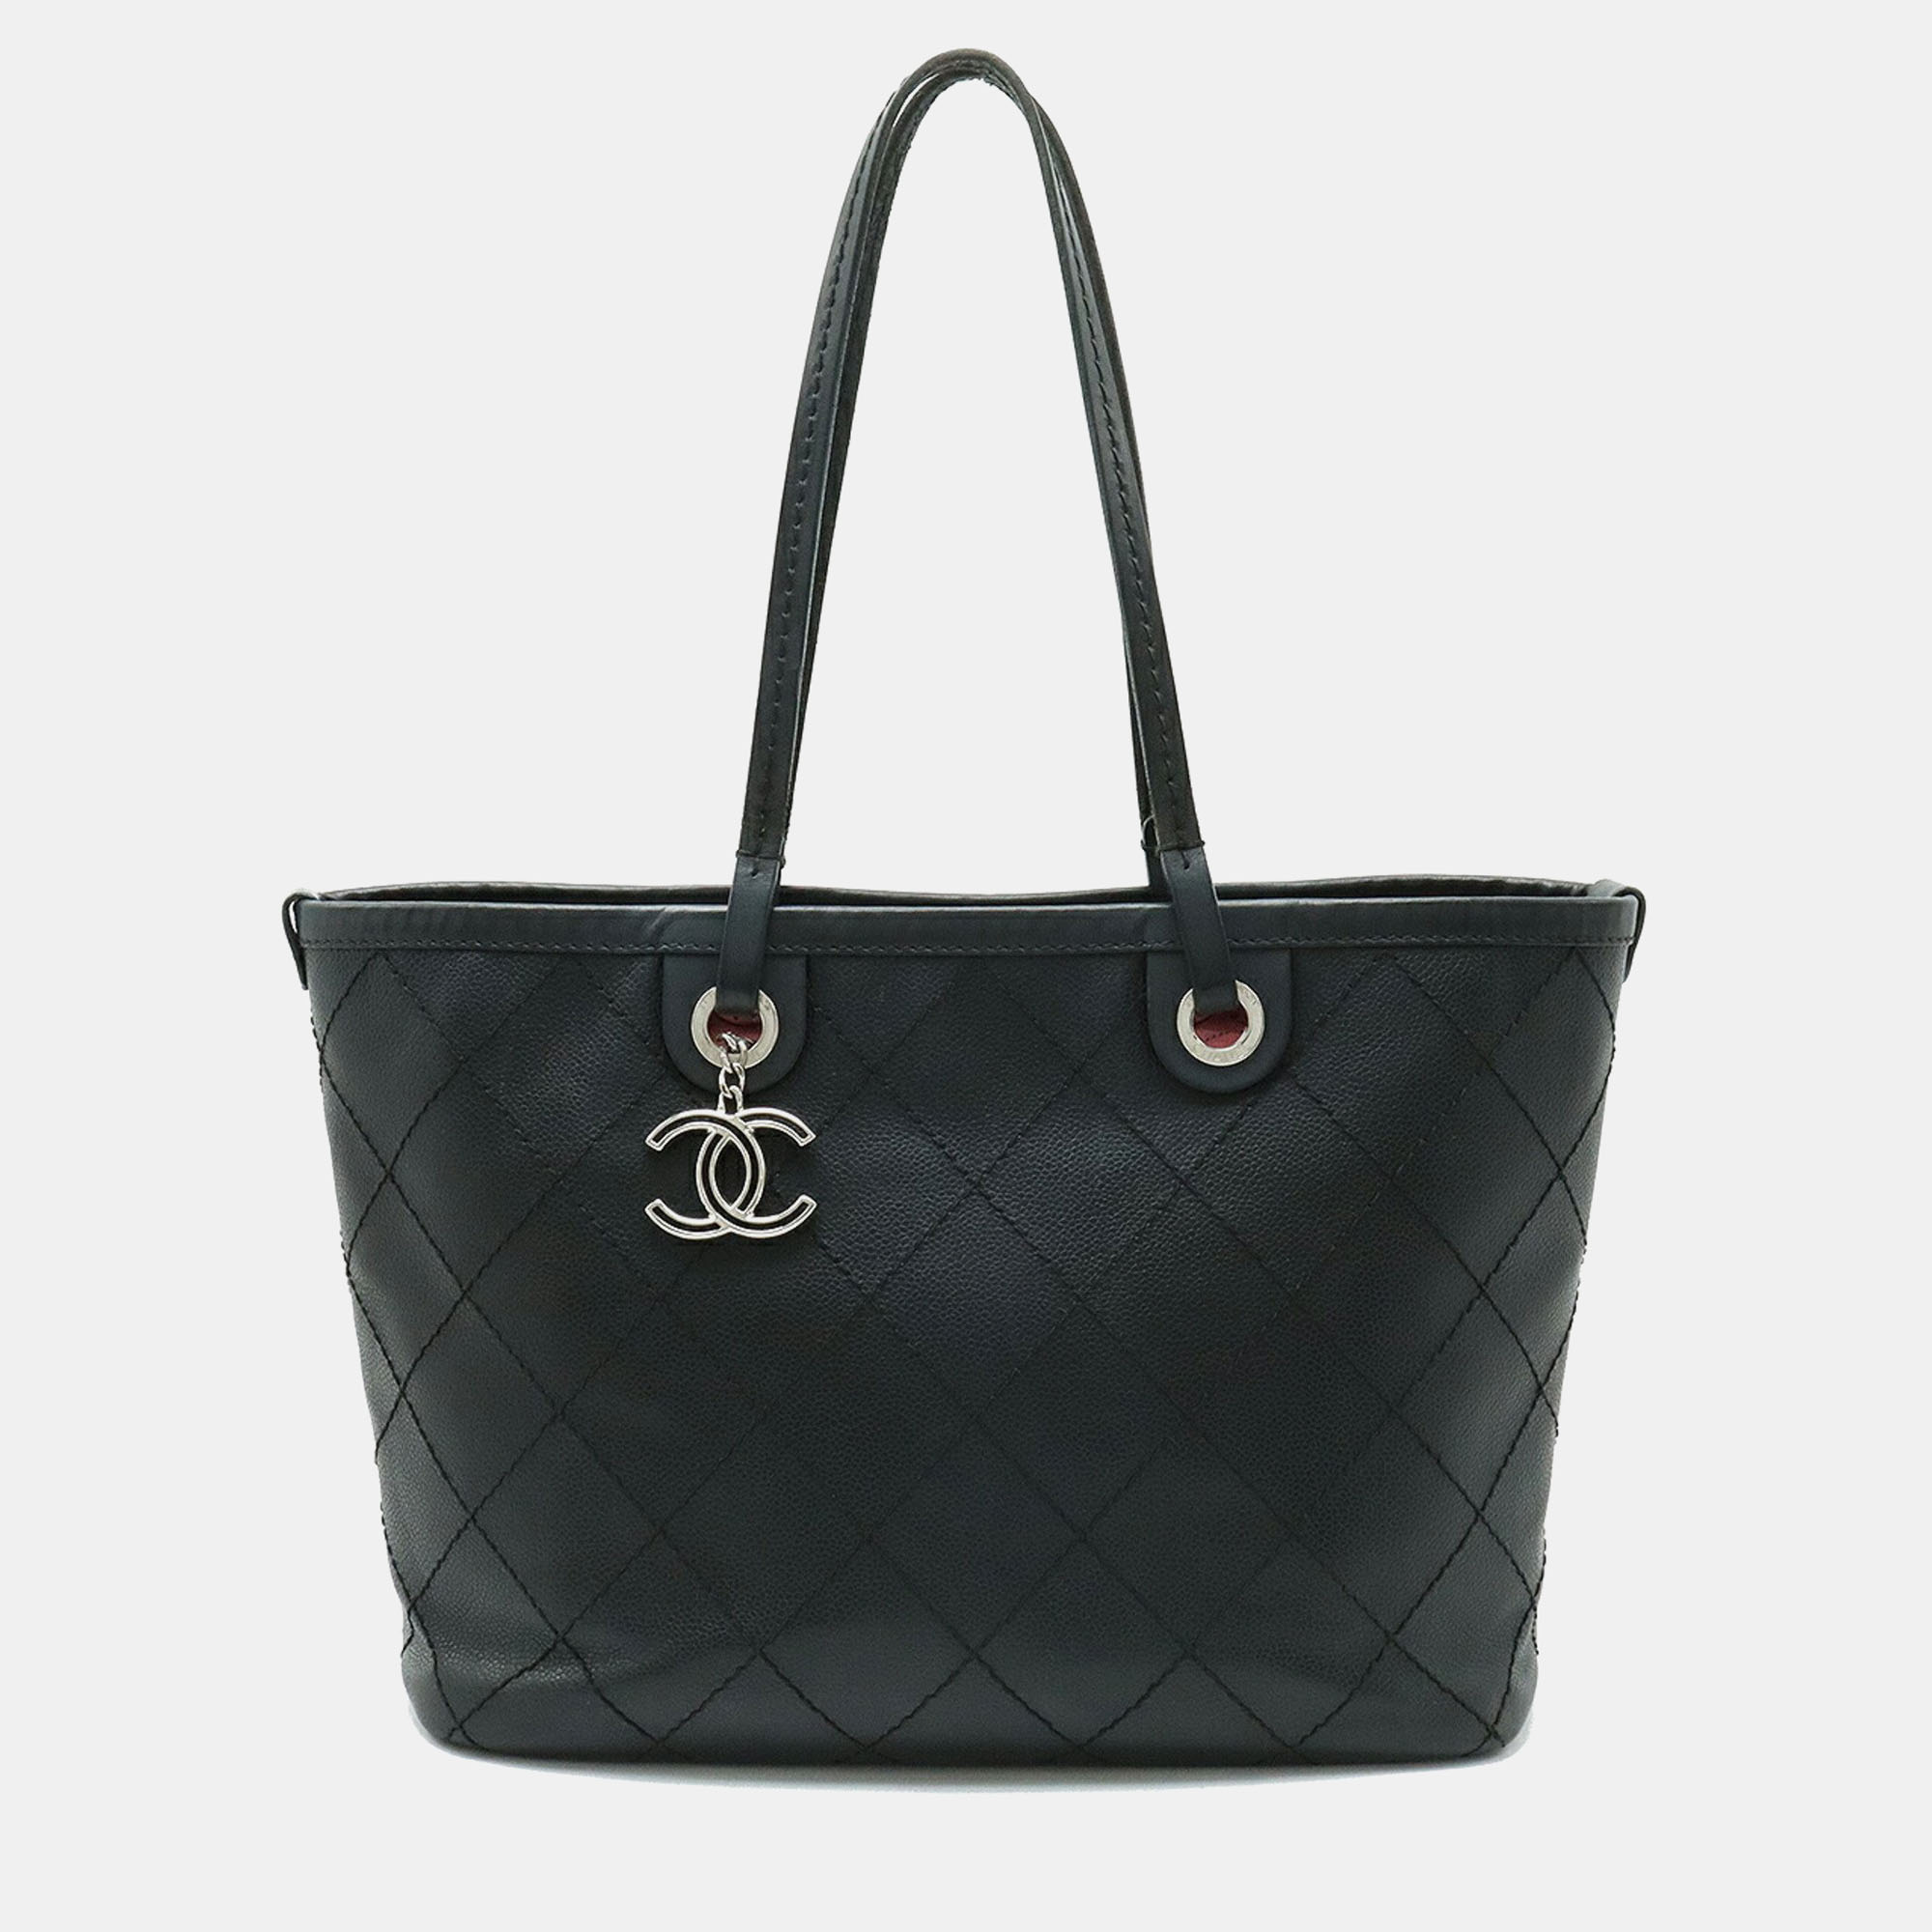 

Chanel Black Leather Medium Shopping fever Tote Bag